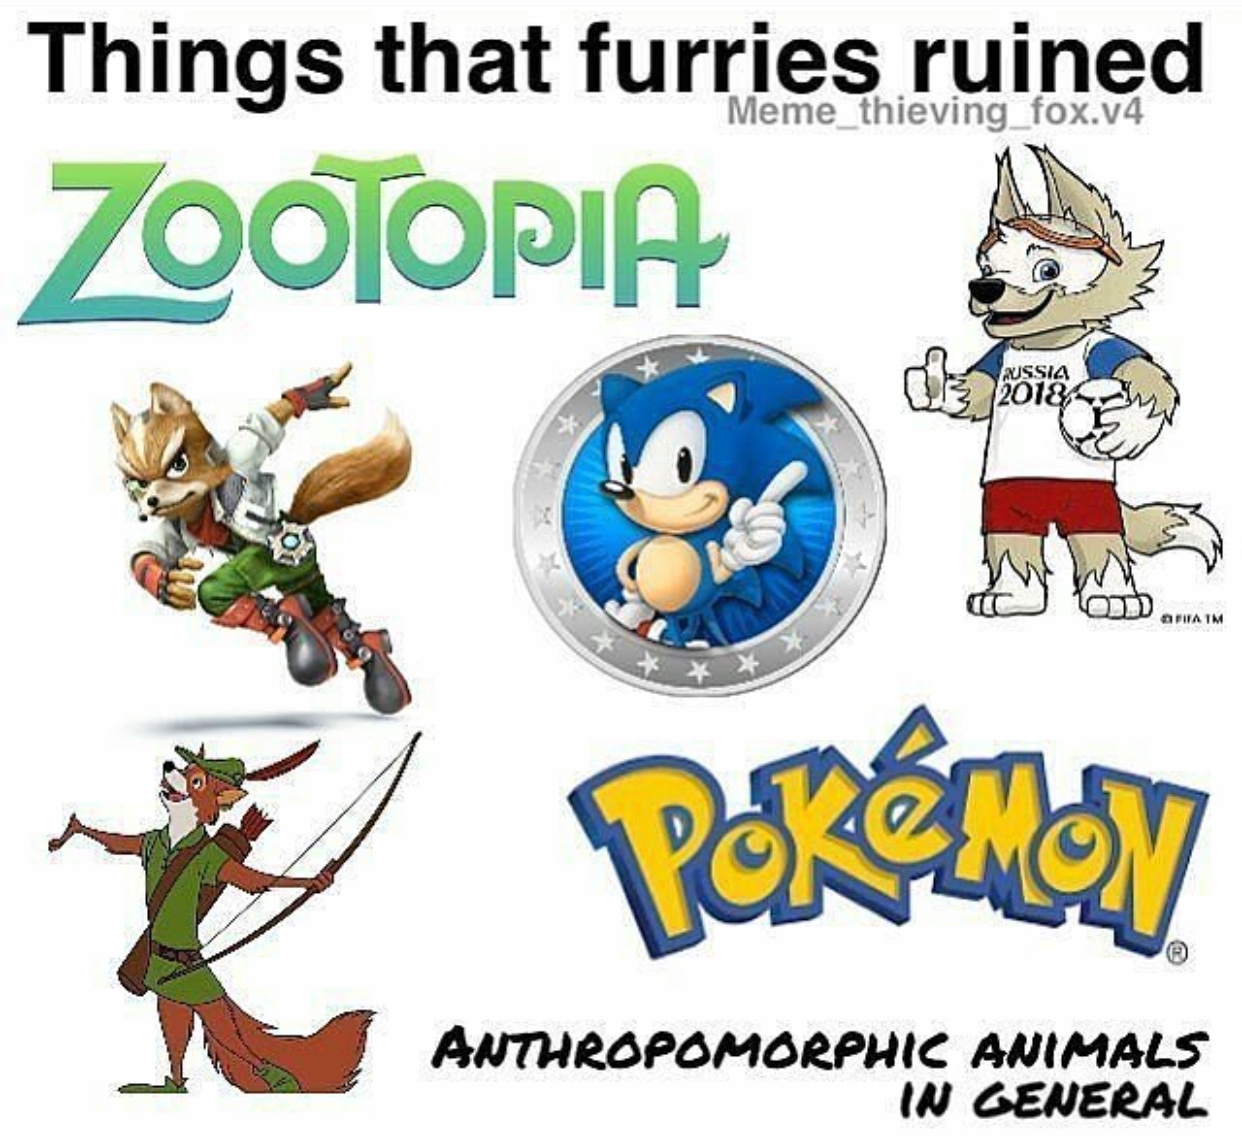 rip animals - meme